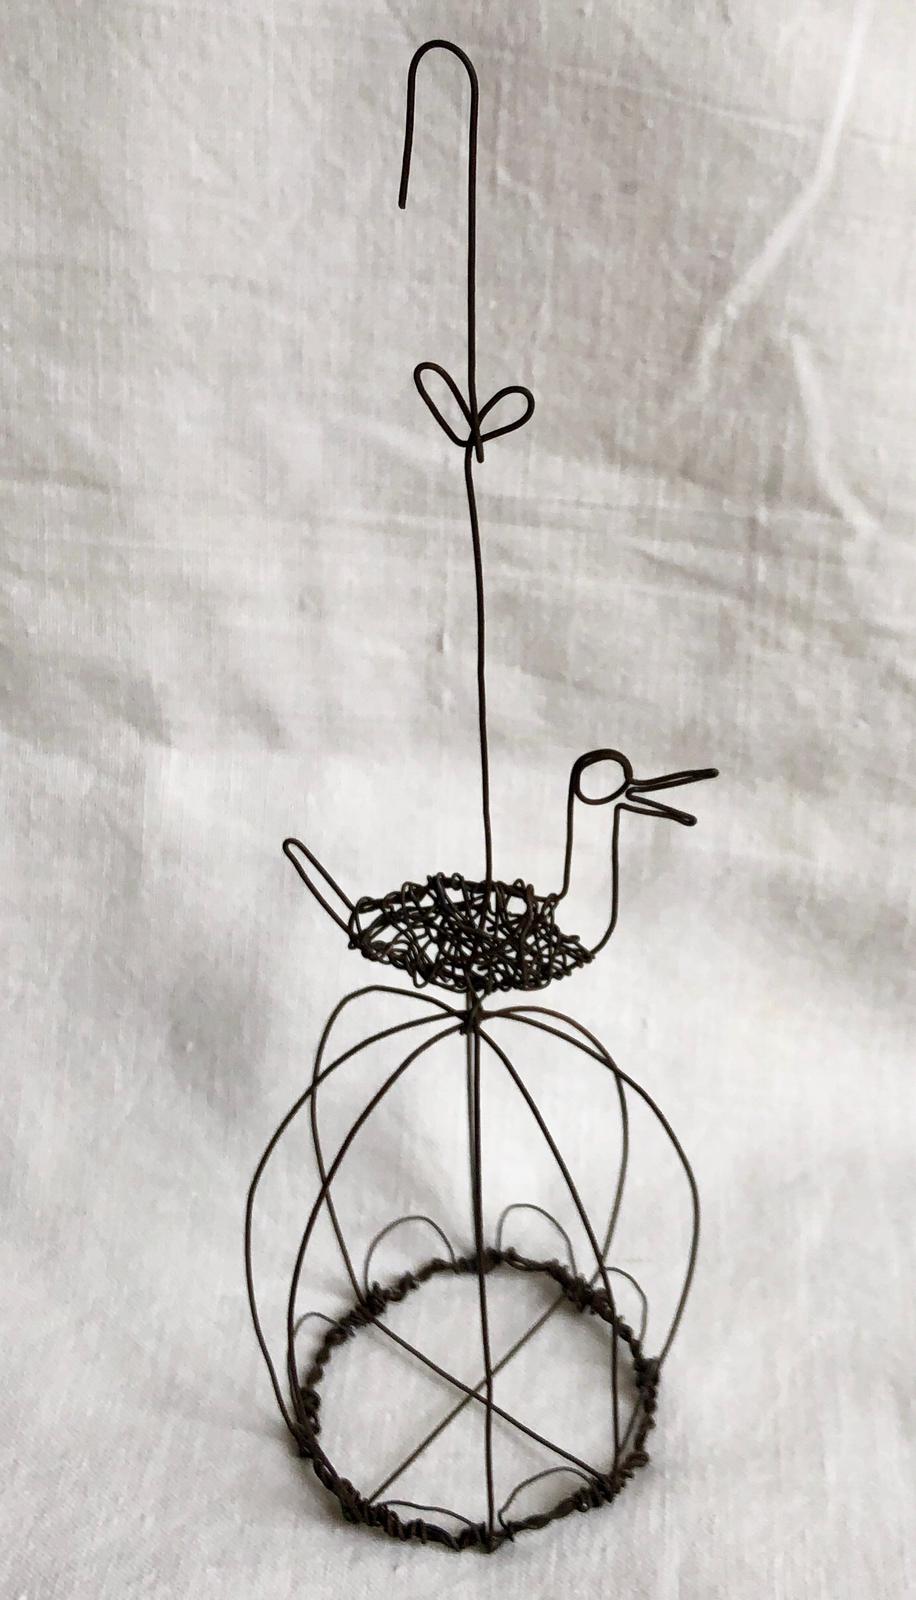 Blooming Designs - Wire Sculptures - BLOOMING DESIGNS